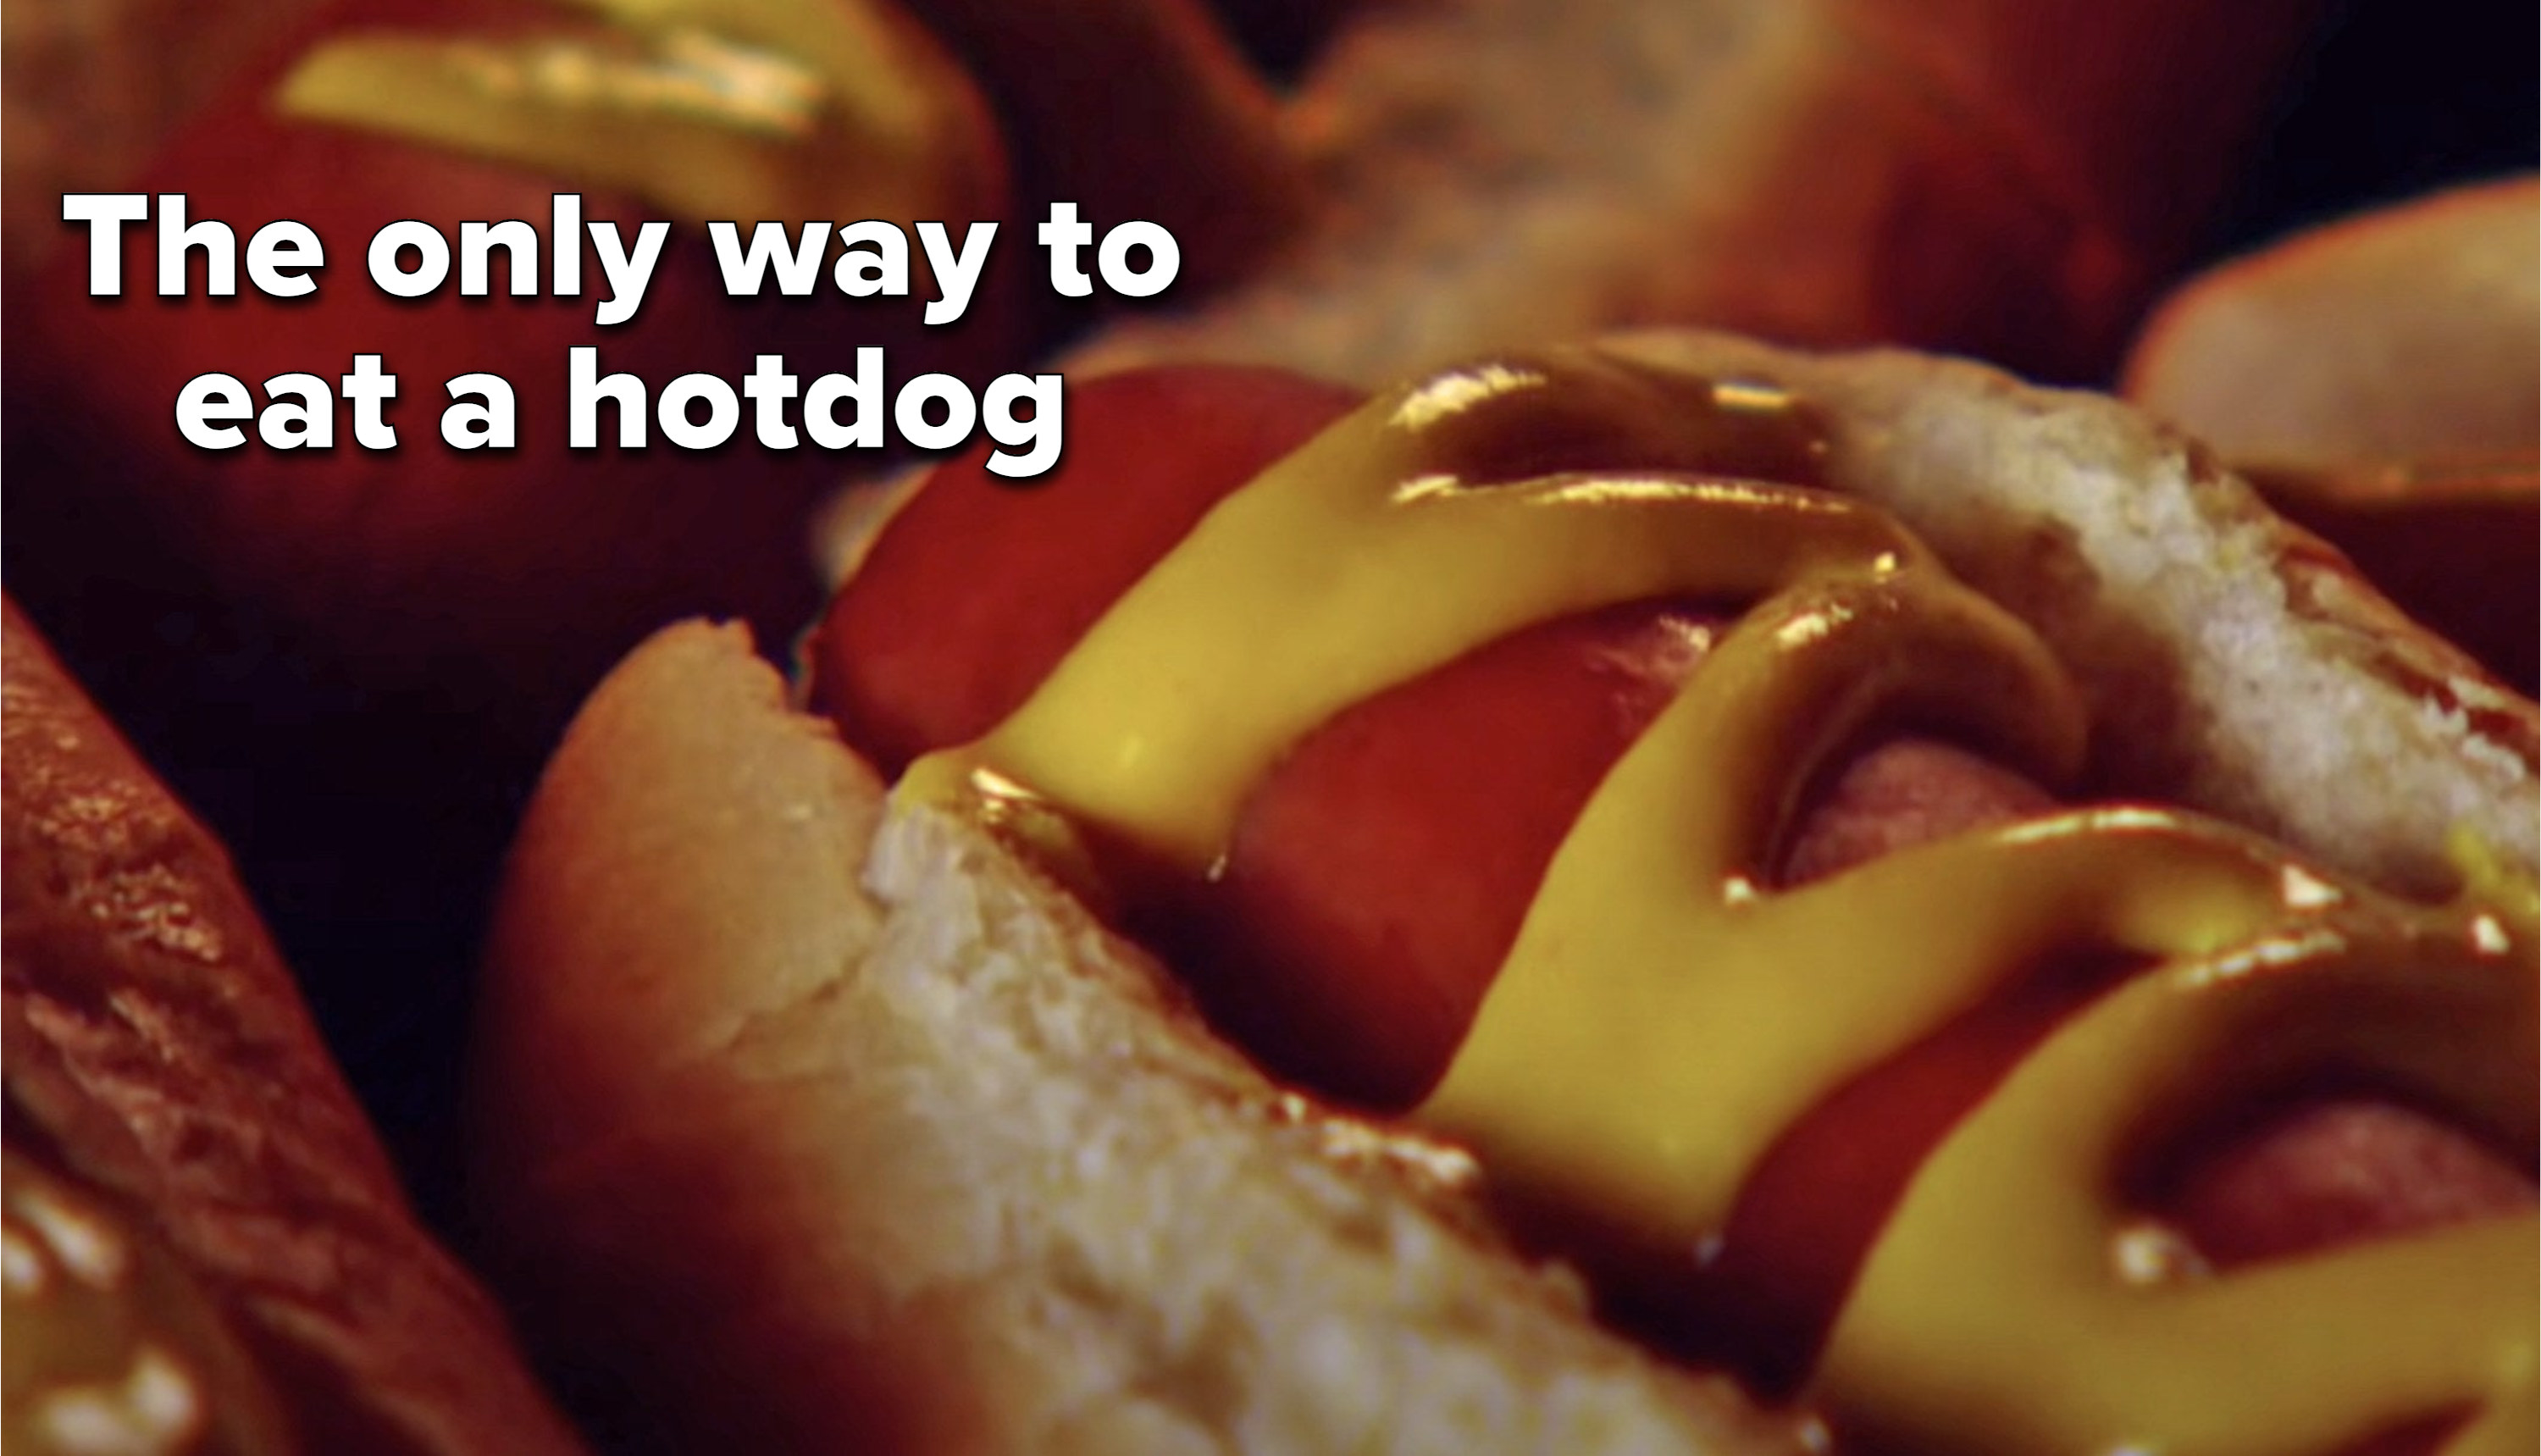 A hotdog with mustard on it